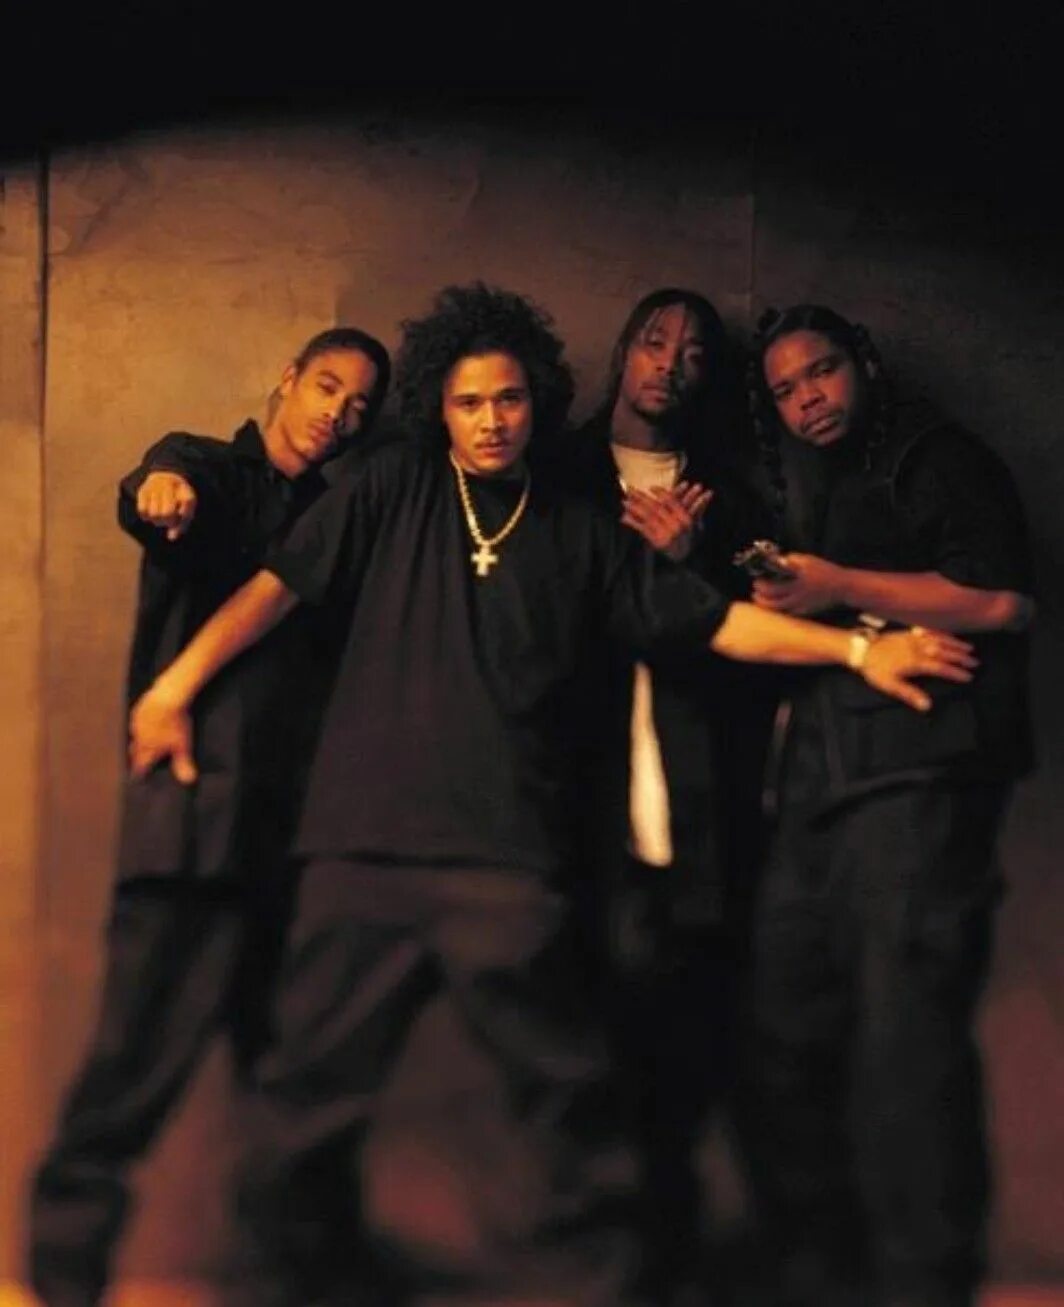 Группа Bone Thugs-n-Harmony. Bone Thugs-n-Harmony состав. Bone Thugs-n-Harmony 90s. Bone Thugs-n-Harmony 1994. Bone n thugs